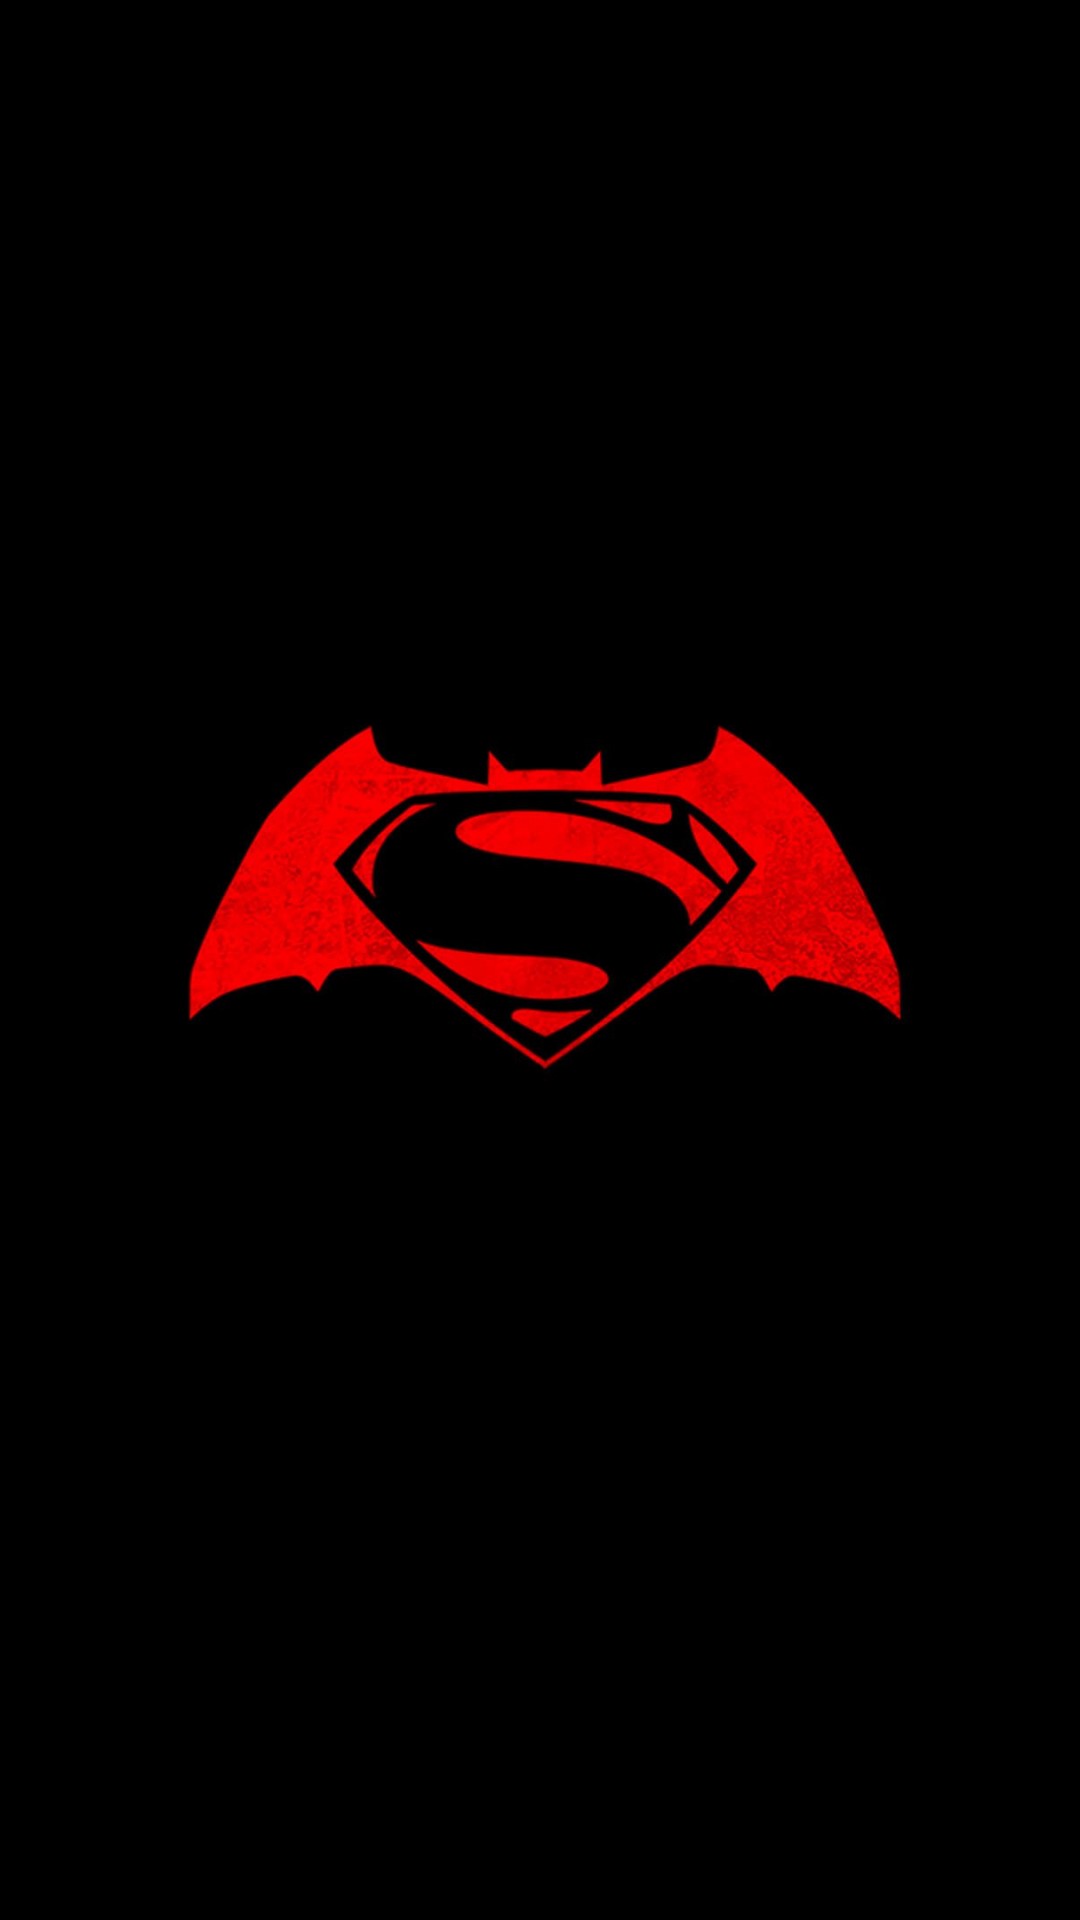 Batman v Superman logo Wallpaper for SONY Xperia Z2